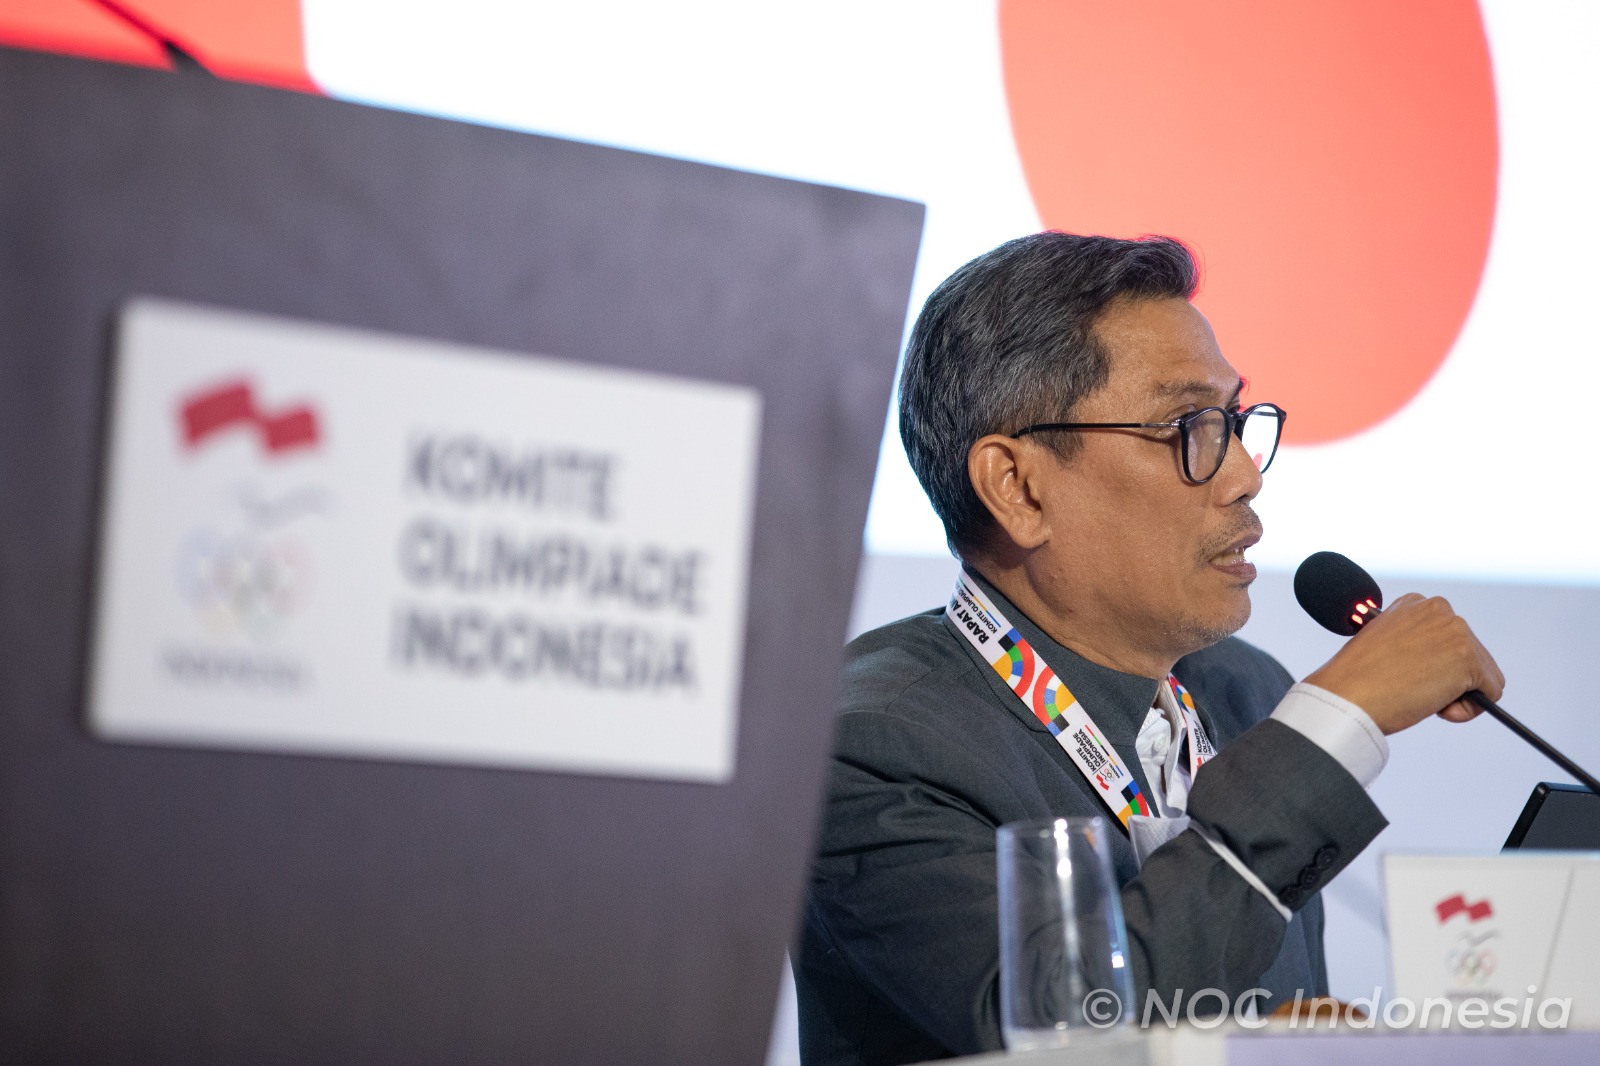 NOC Indonesia temporarily suspend PP PTMSI Membership - Indonesia Olympic Commitee